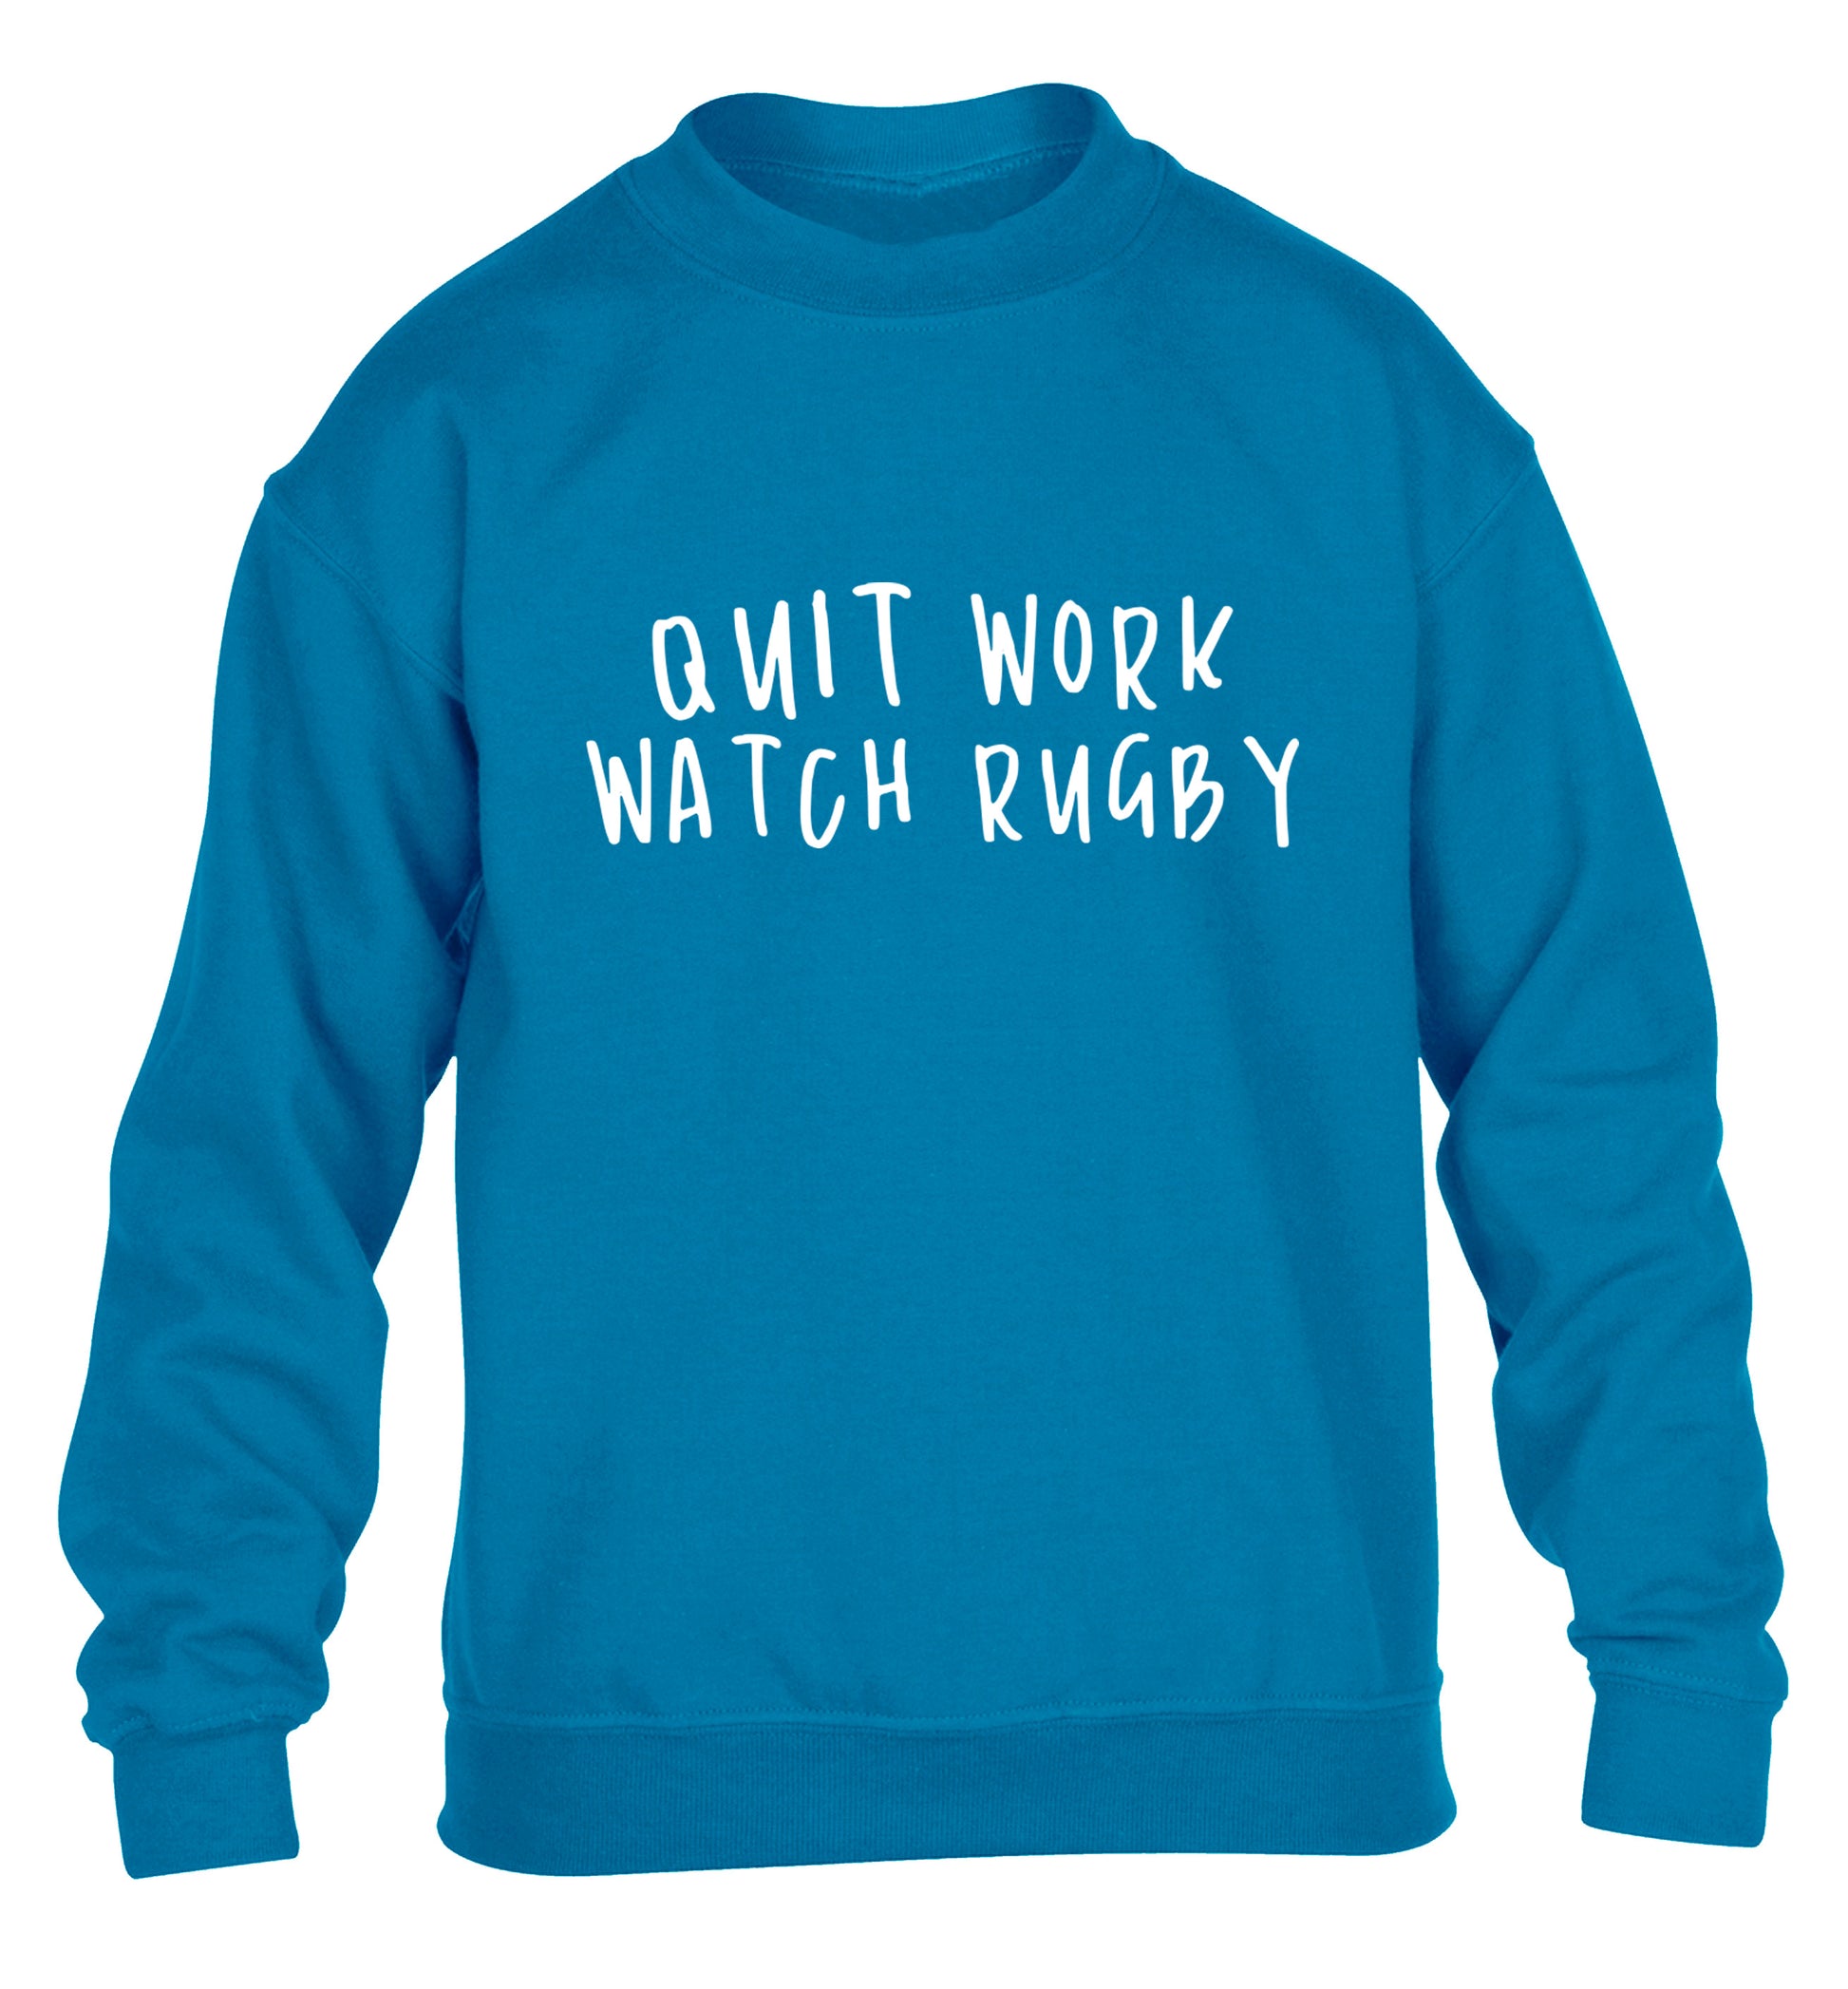 Quit work watch rugby children's blue sweater 12-13 Years